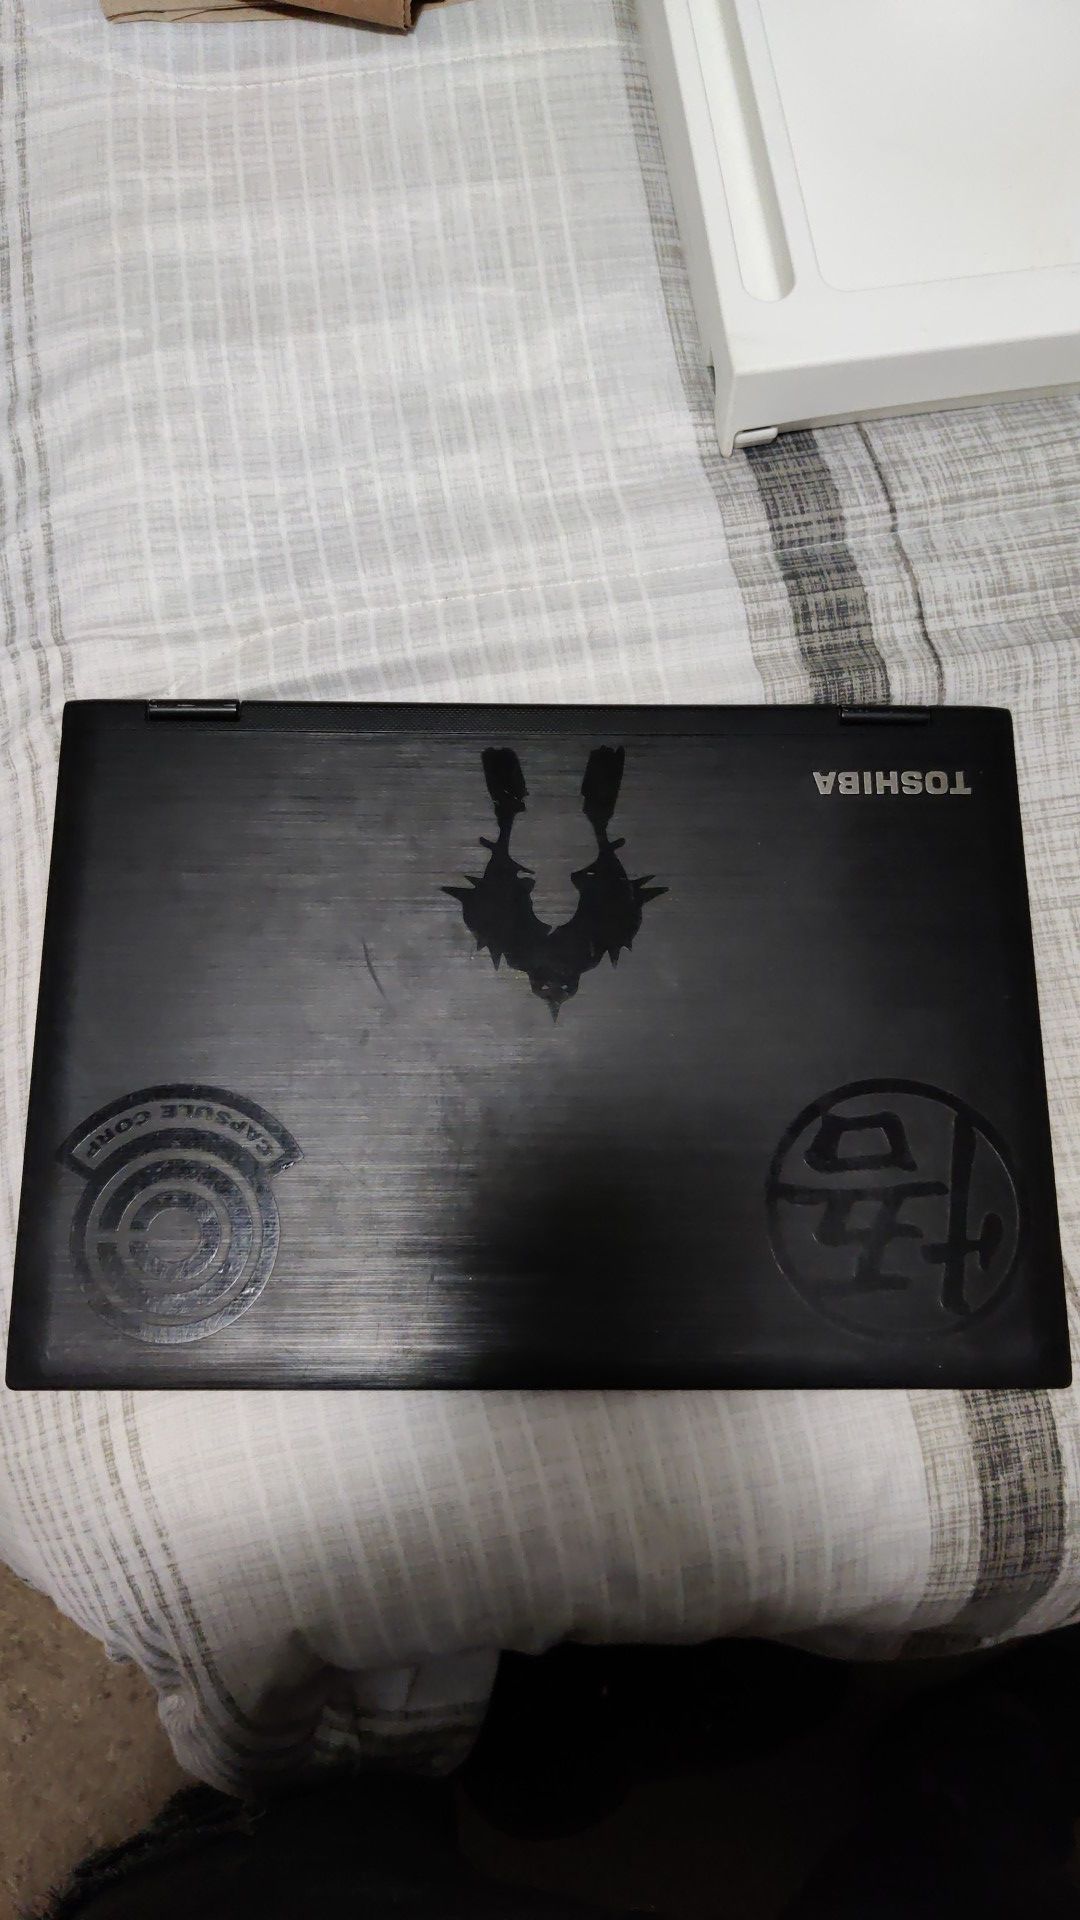 Toshiba 2 in 1 laptop